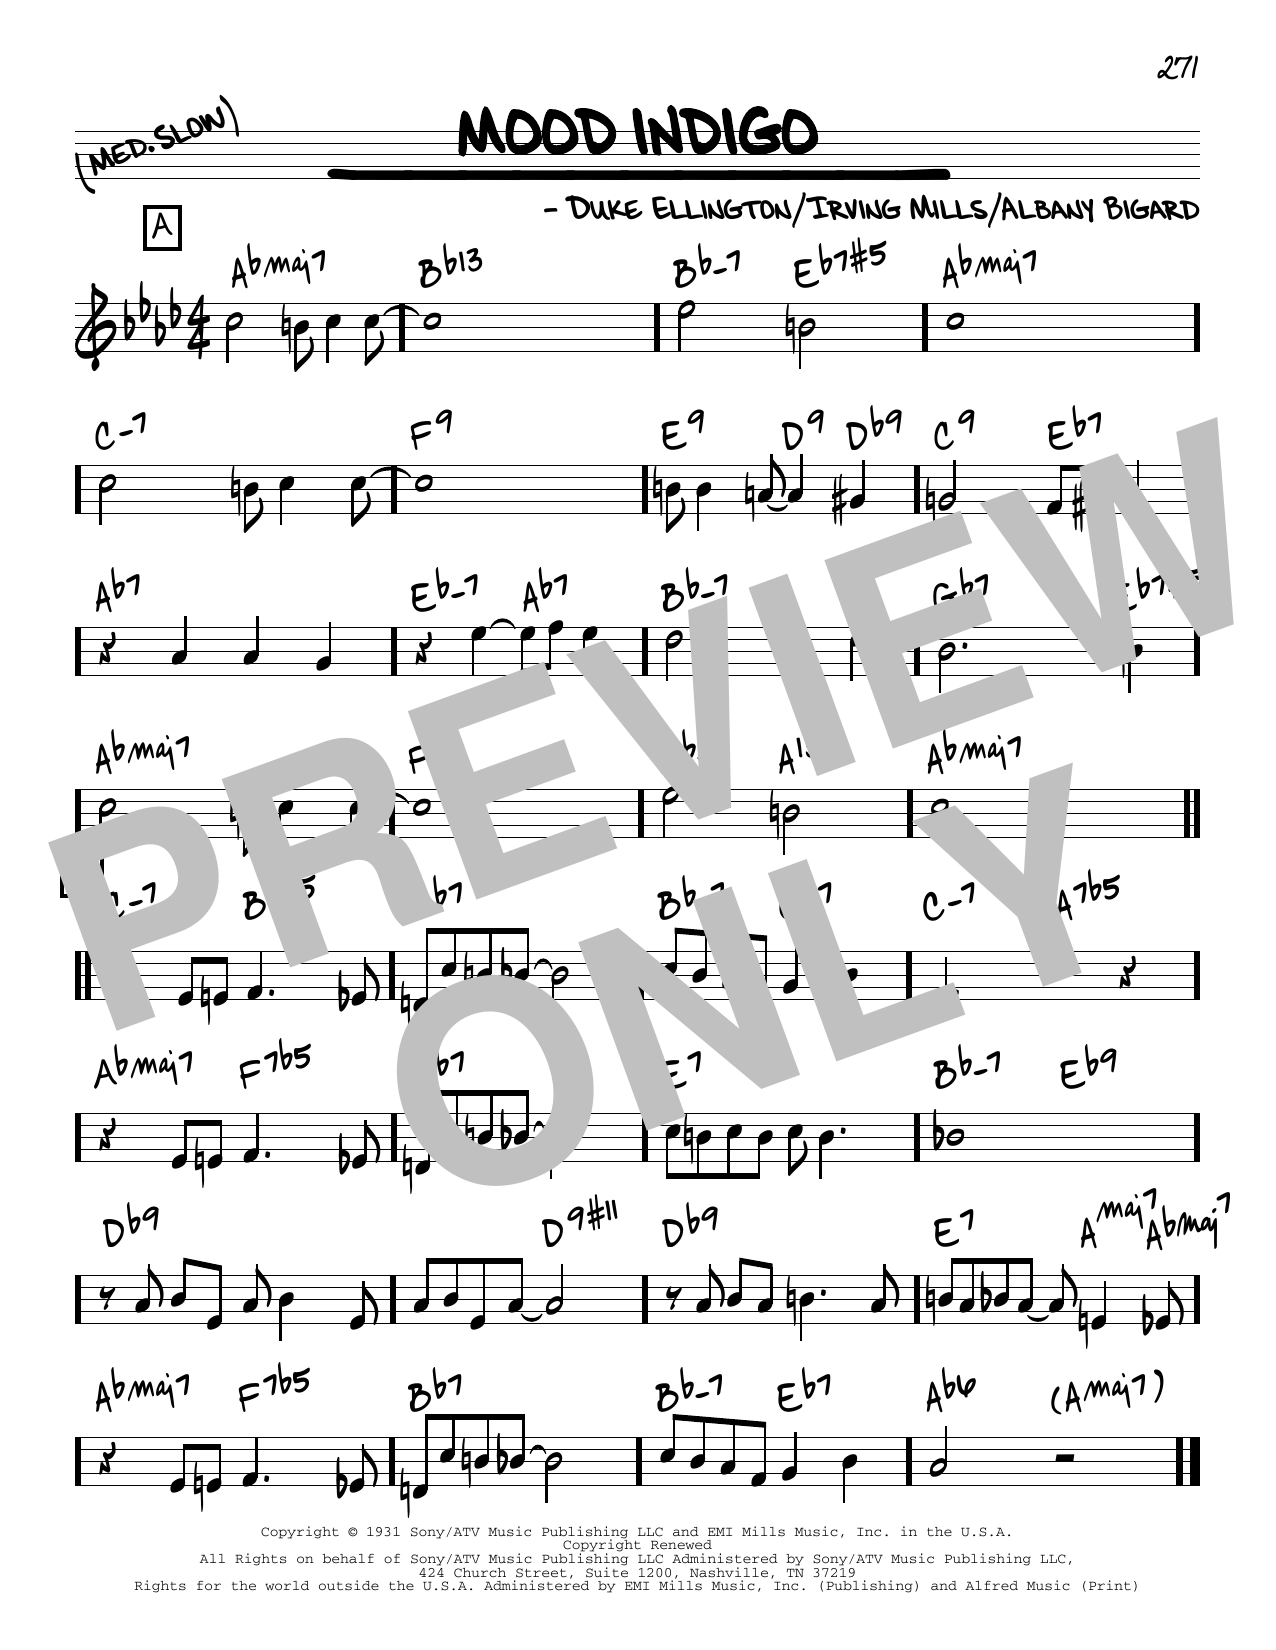 Duke Ellington Mood Indigo [Reharmonized version] (arr. Jack Grassel) Sheet Music Notes & Chords for Real Book – Melody & Chords - Download or Print PDF